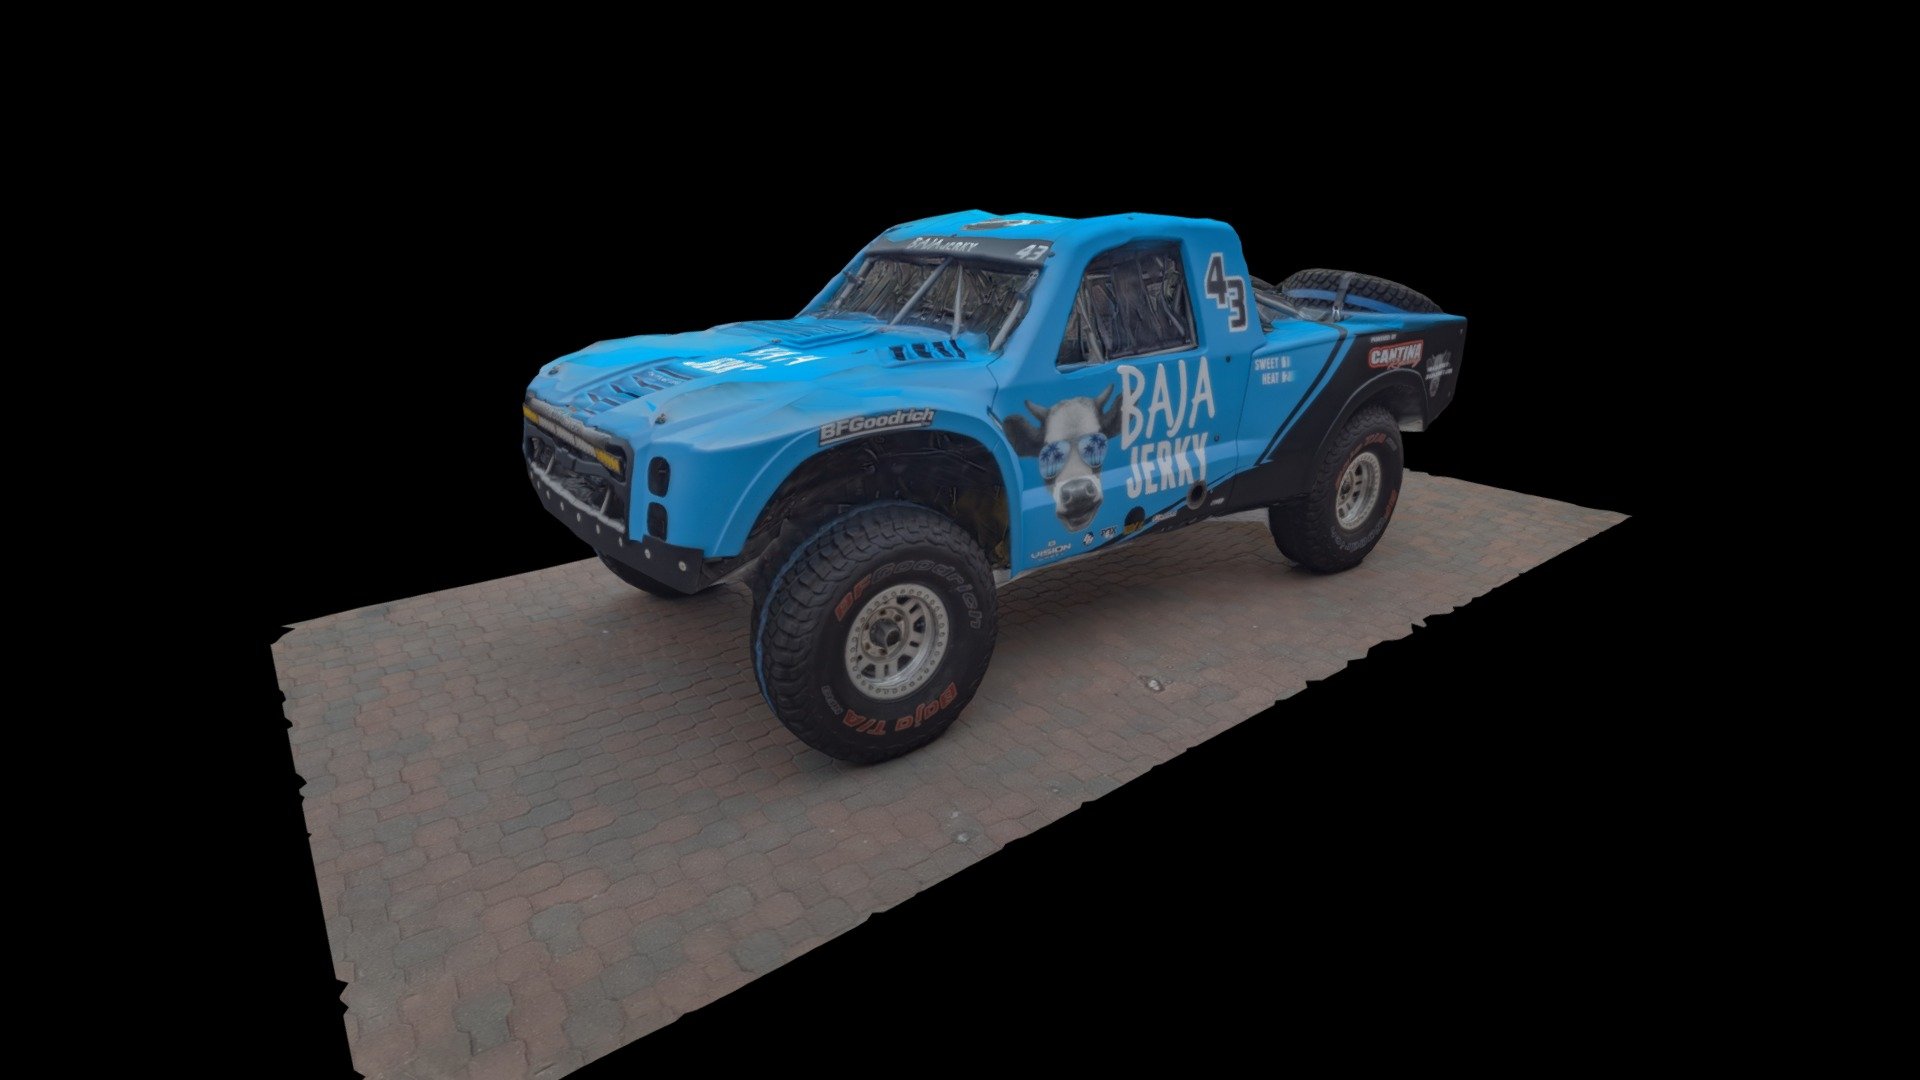 Quick Scan, shot on OnePlus 6.

Del Mar, CA - Baja Trophy Truck - 3D model by fourzeronine 3d model